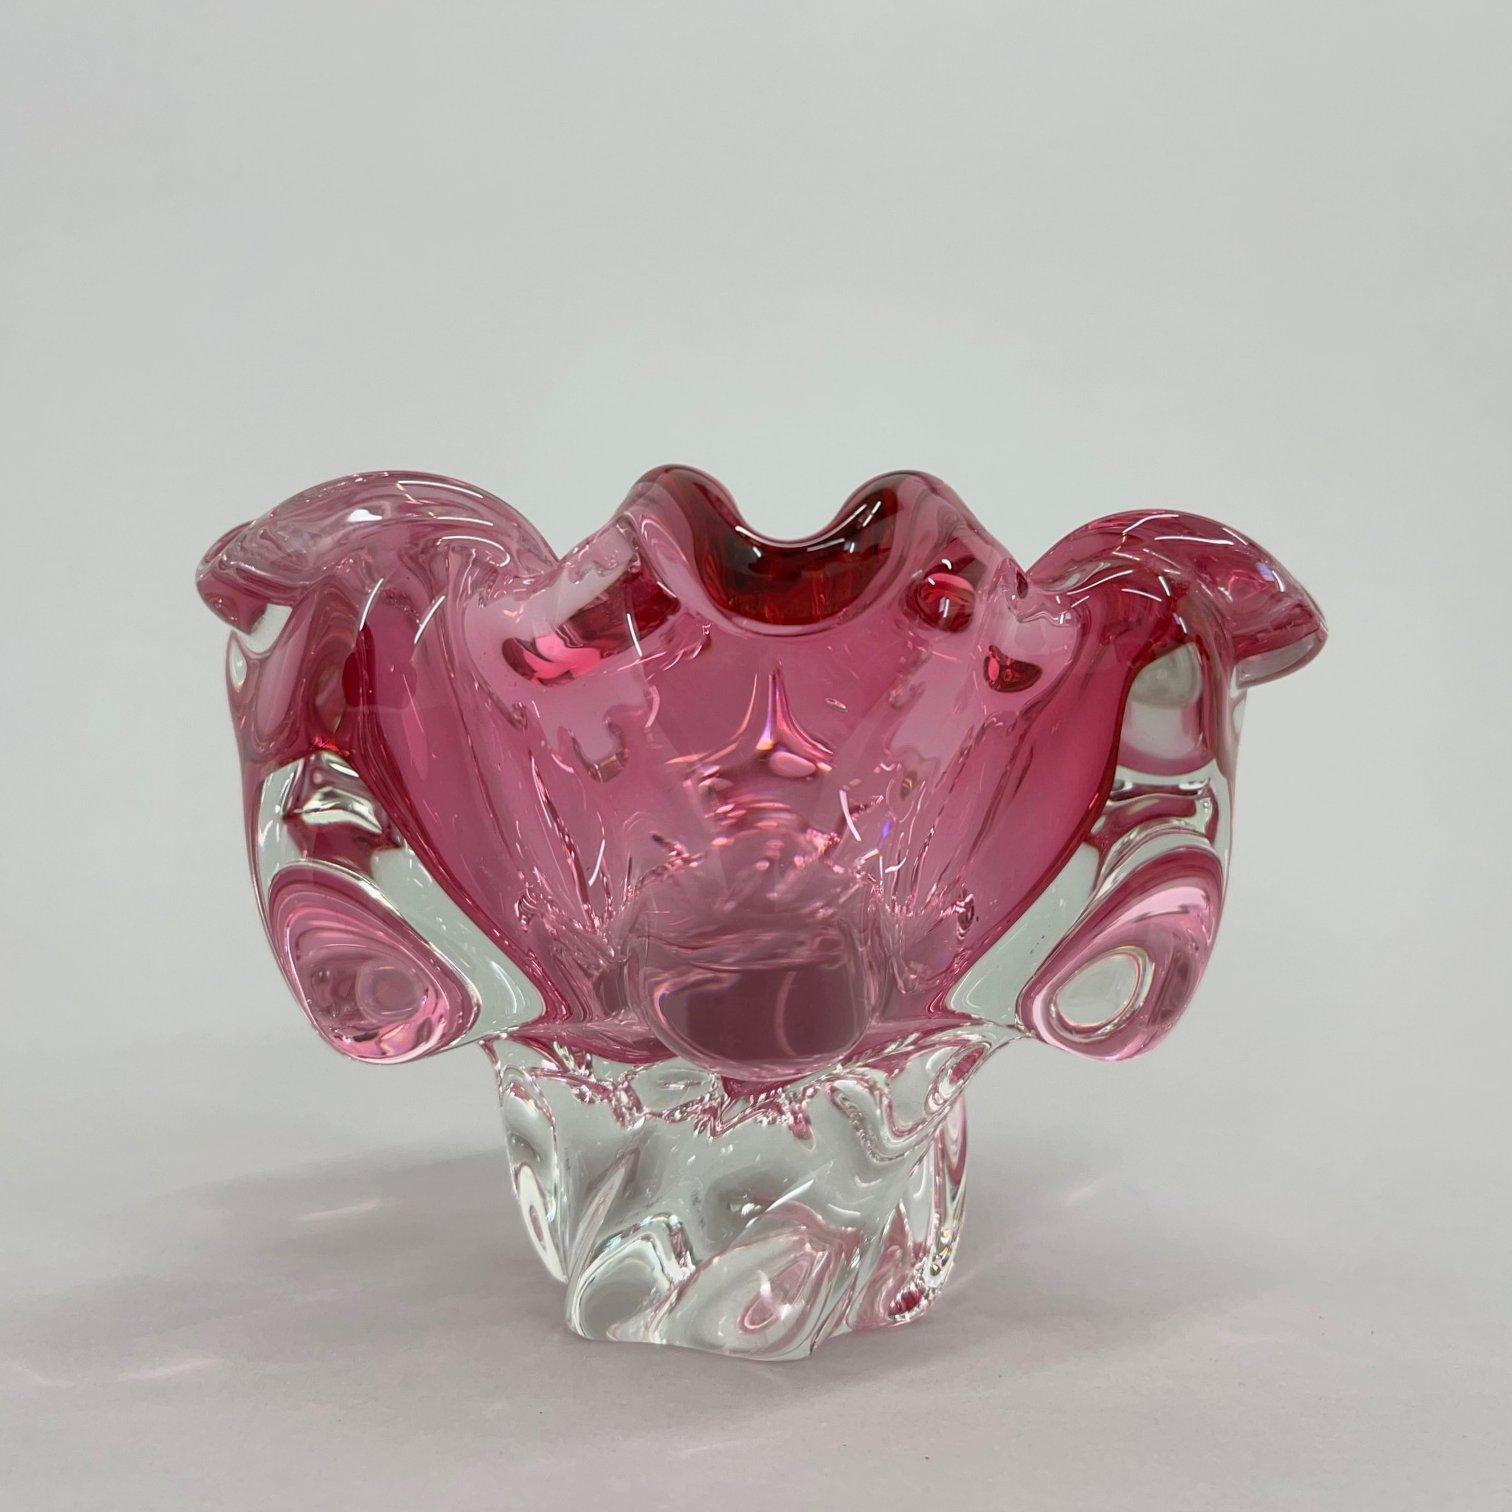 Art glass bowl by a glass designer Josef Hospodka, made in Chribska Glassworks in former Czechoslovakia in the 1960's.